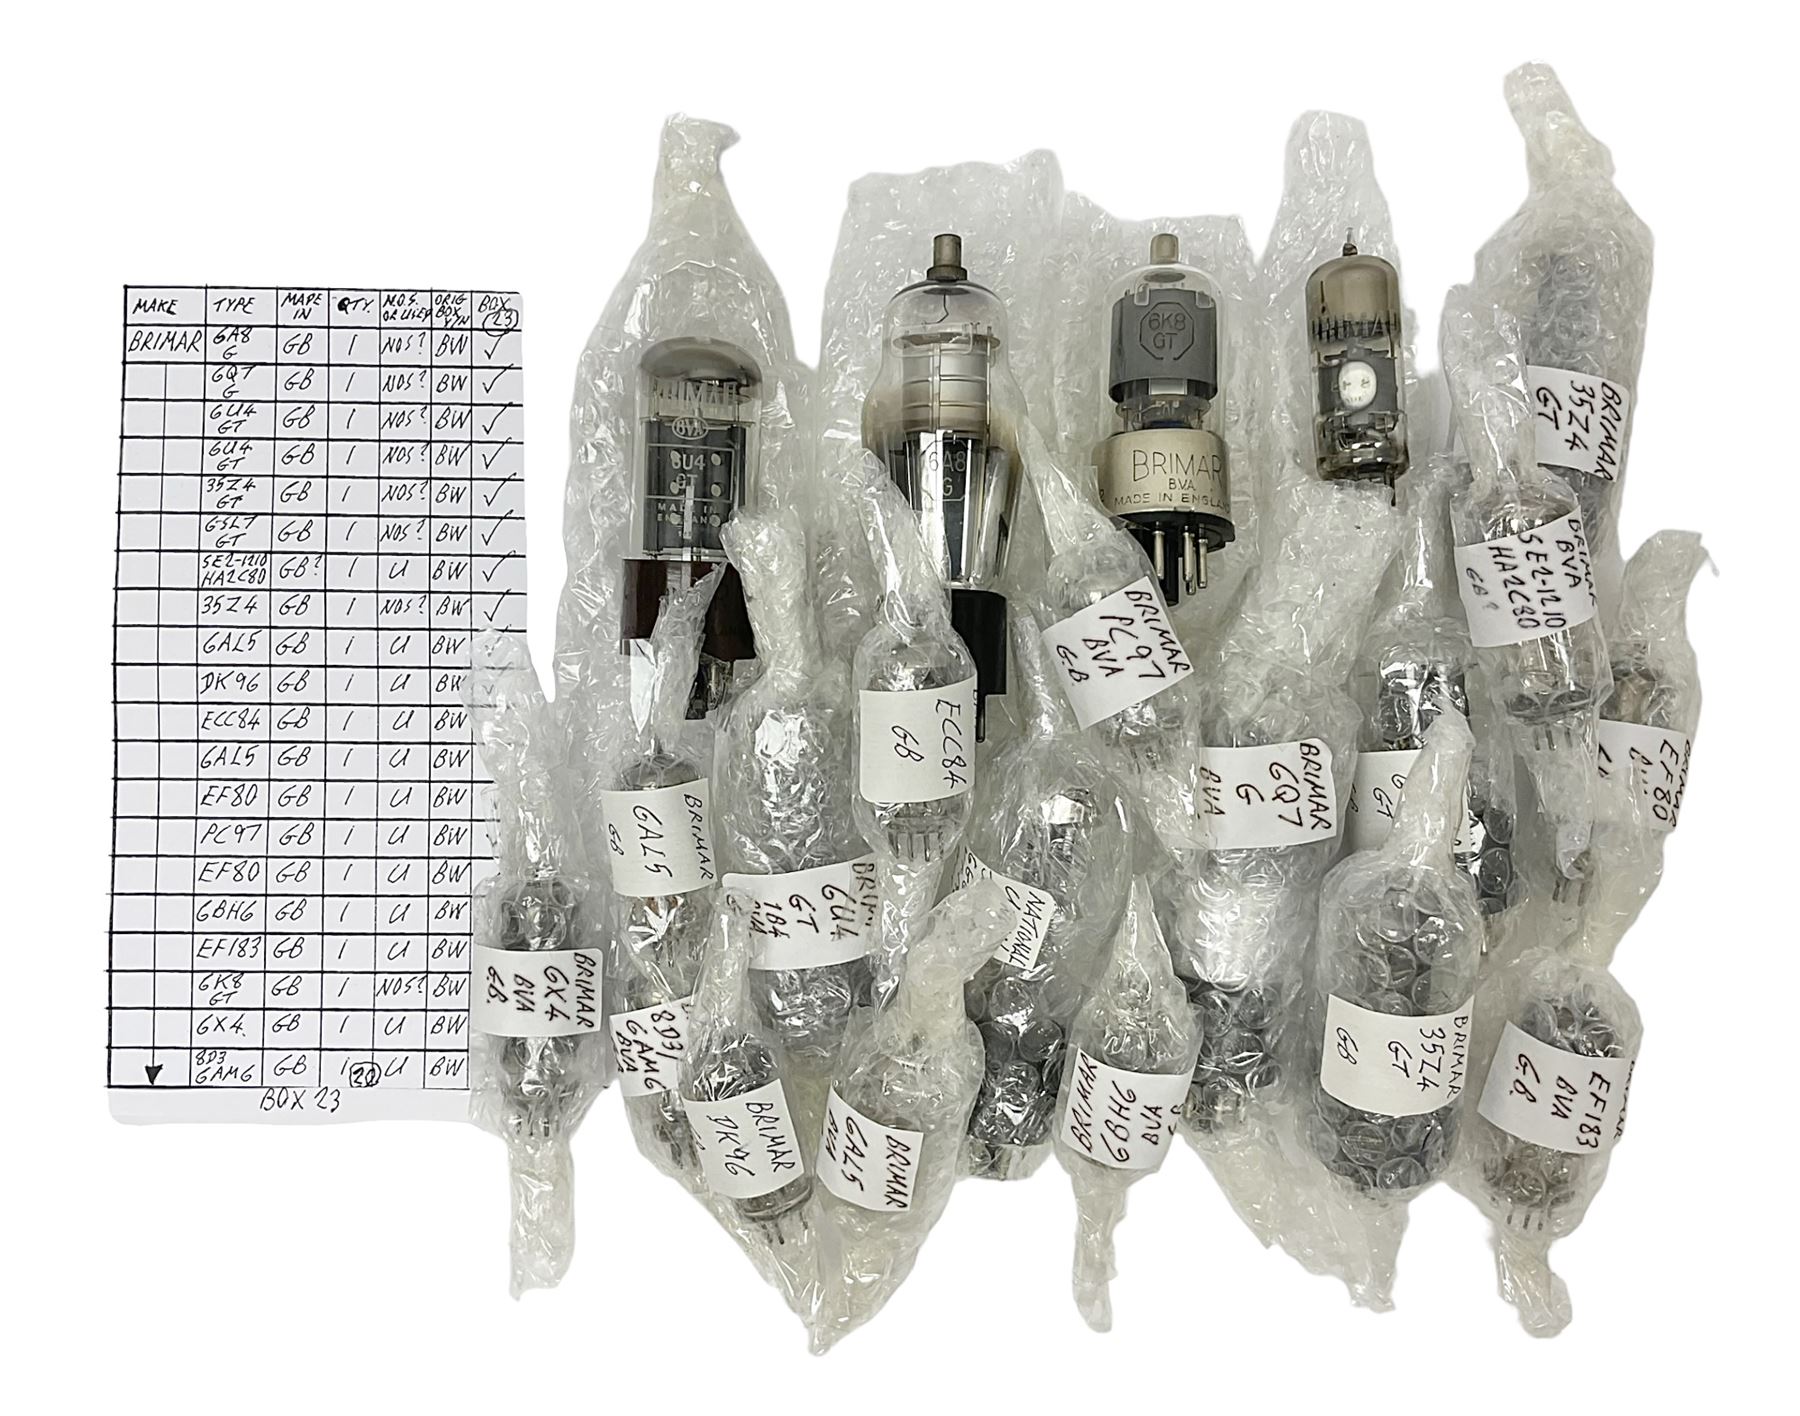 Collection of Brimar thermionic radio valves/vacuum tubes